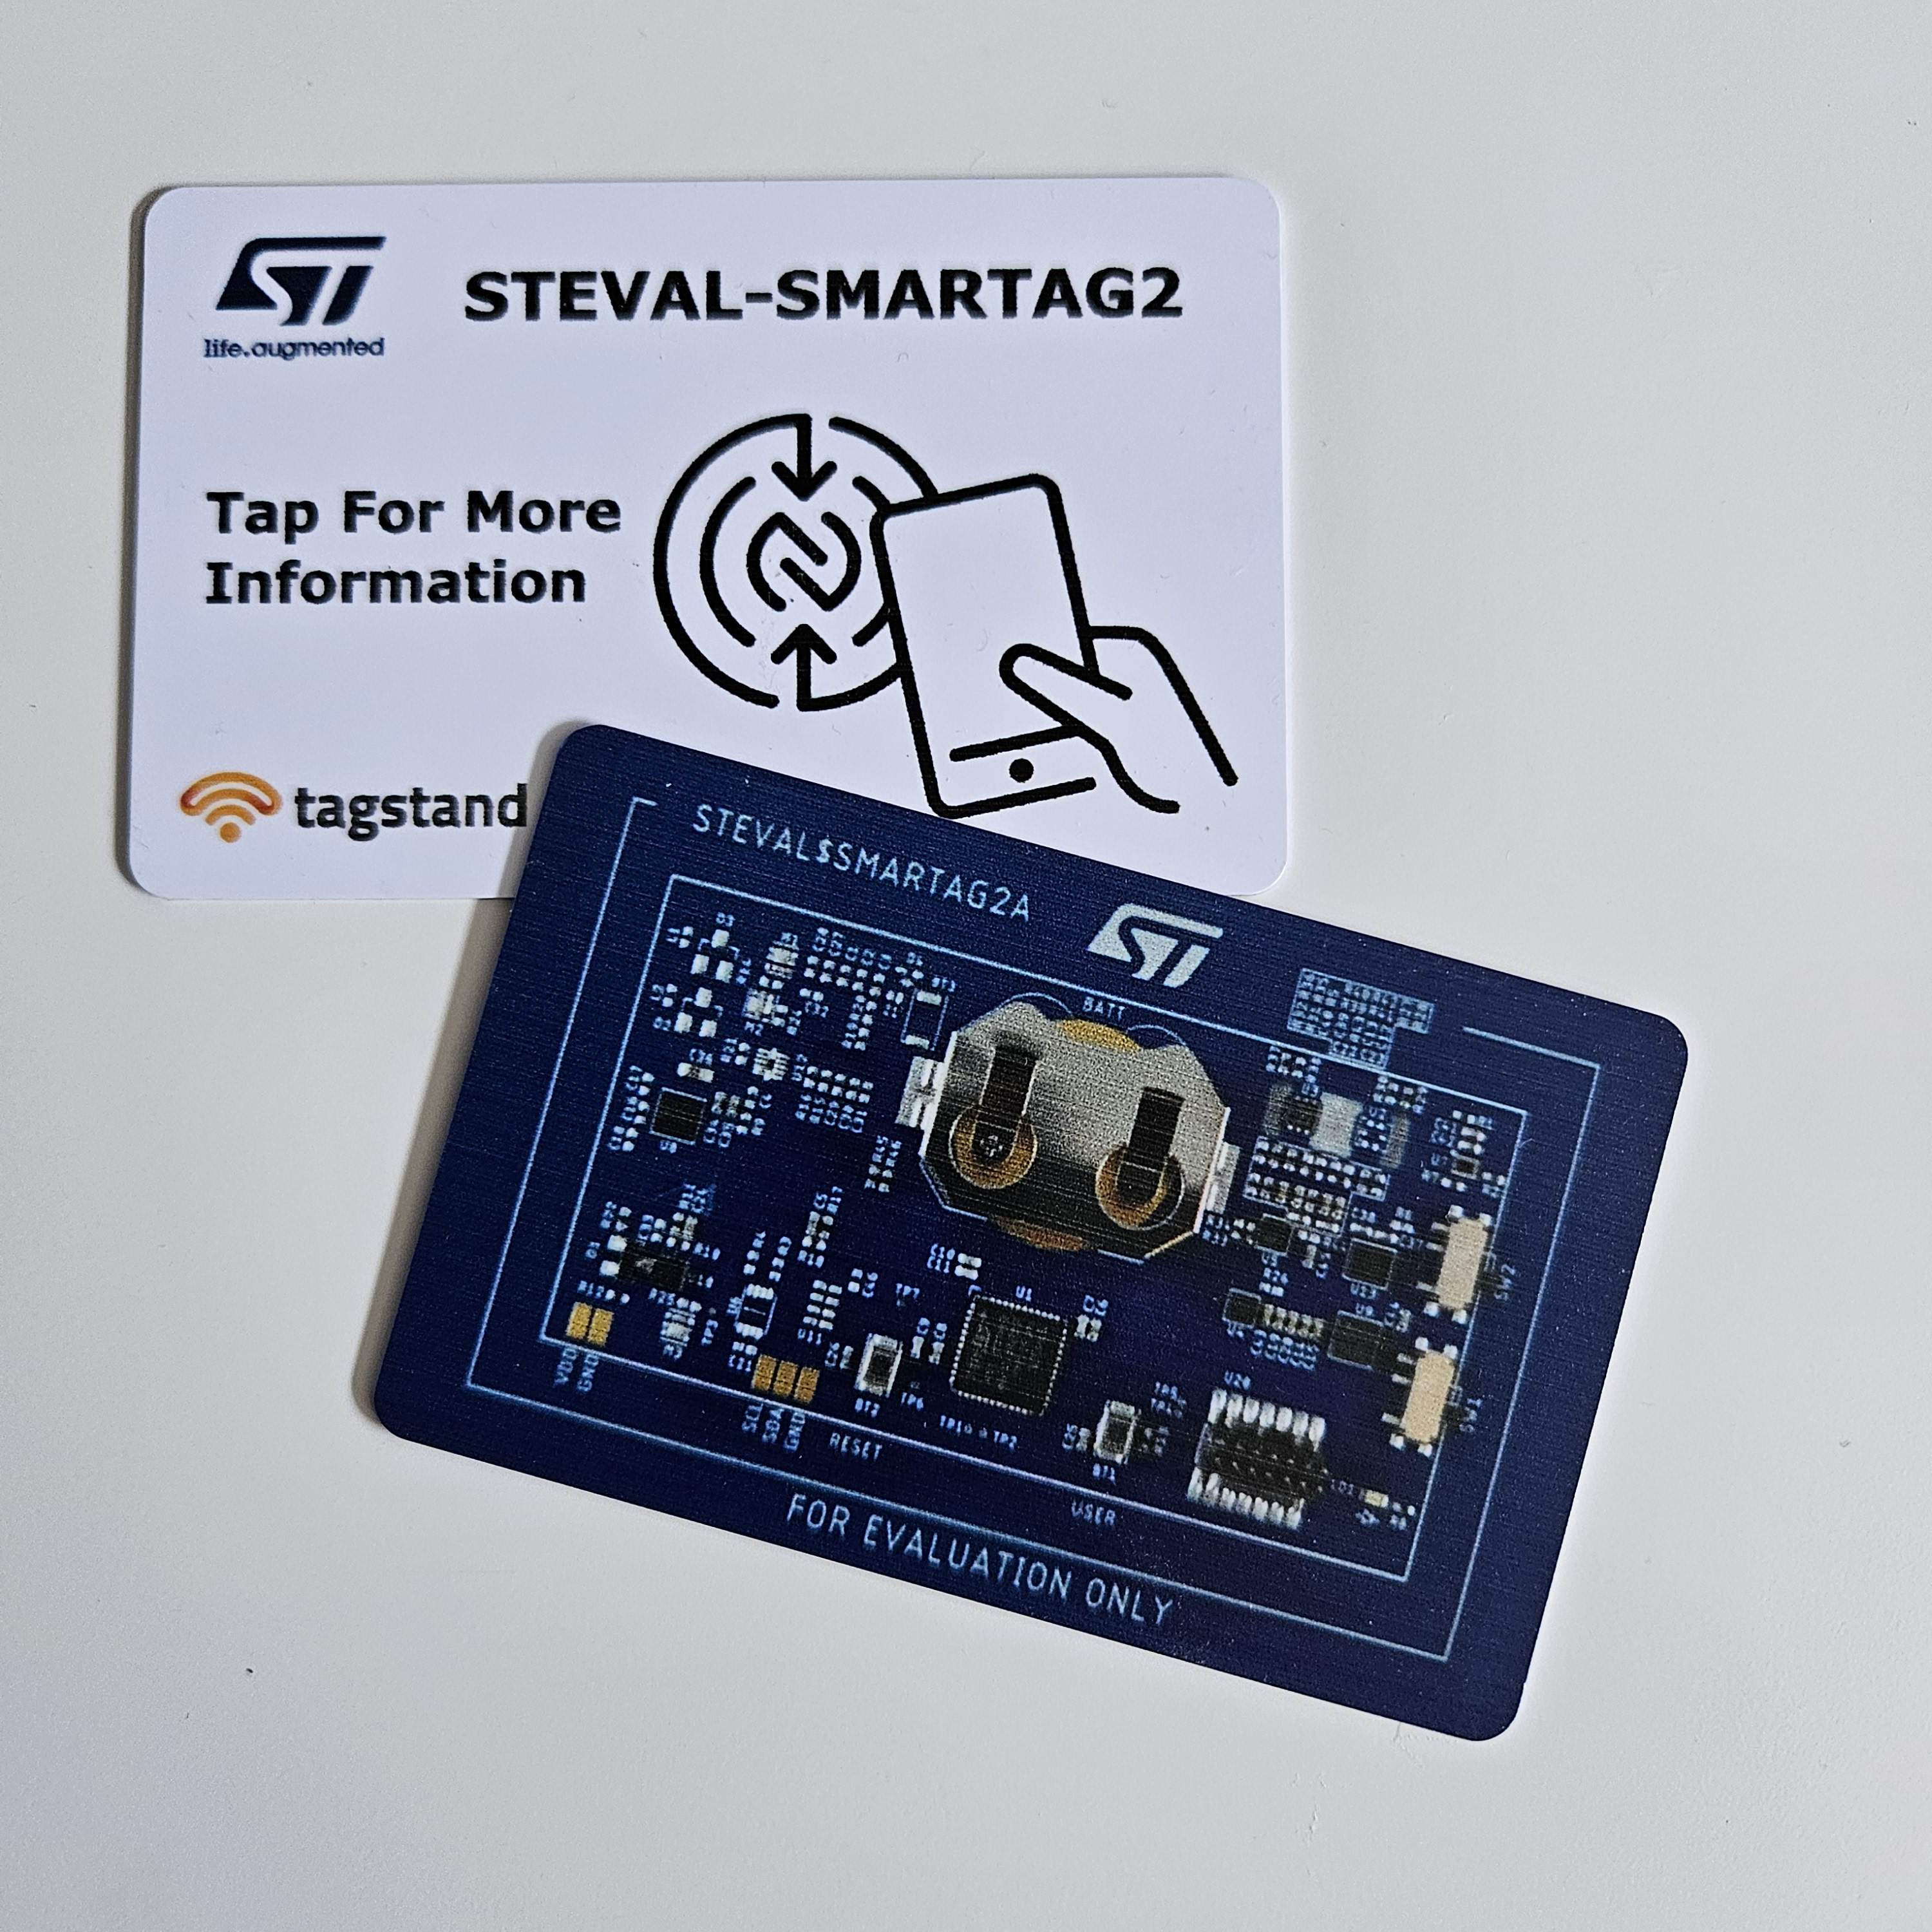 NFC cards promoting STEVAL-SMARTAG2